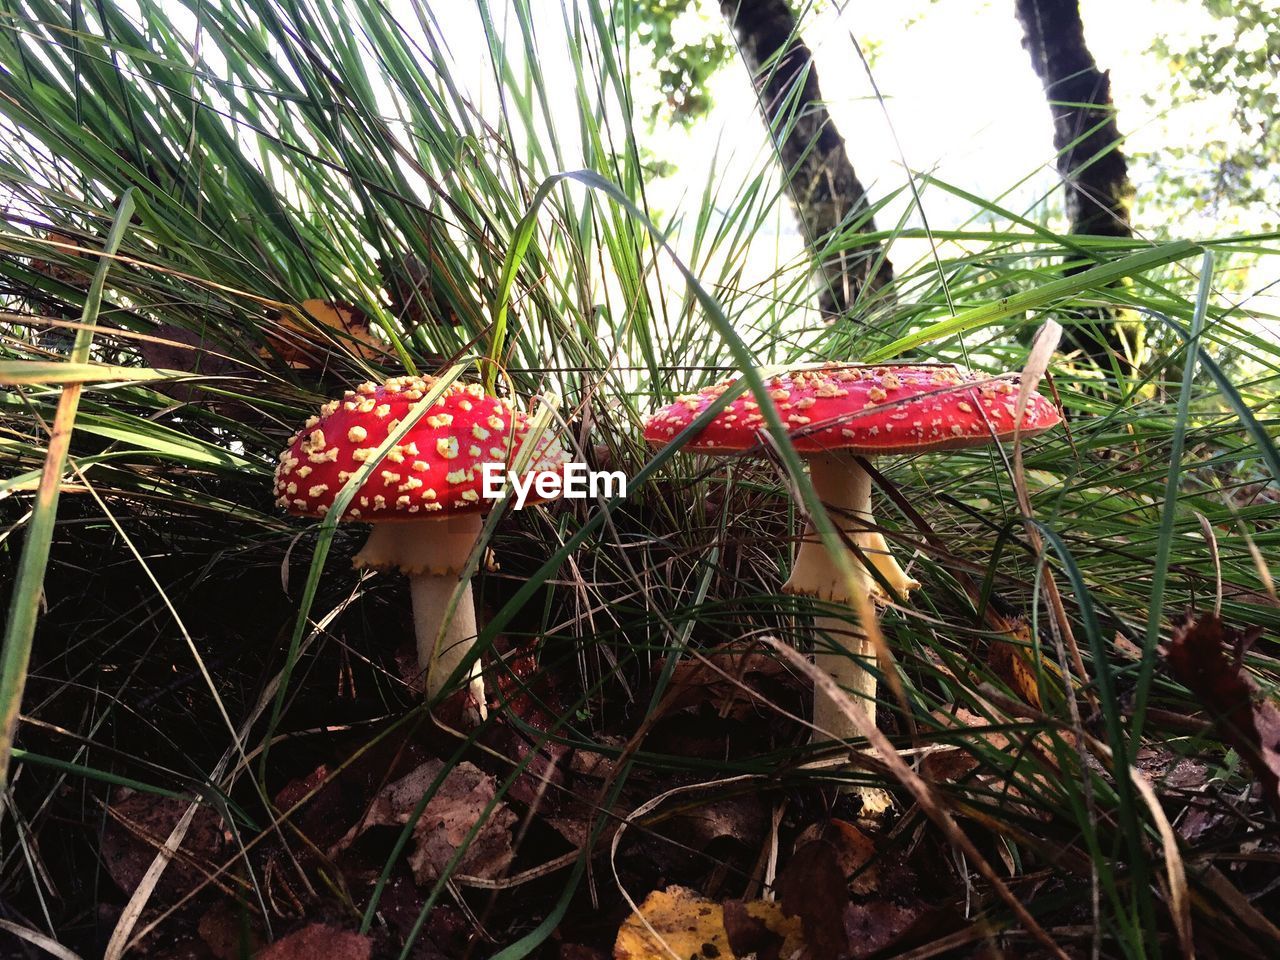 Fly agaric mushrooms growing on field